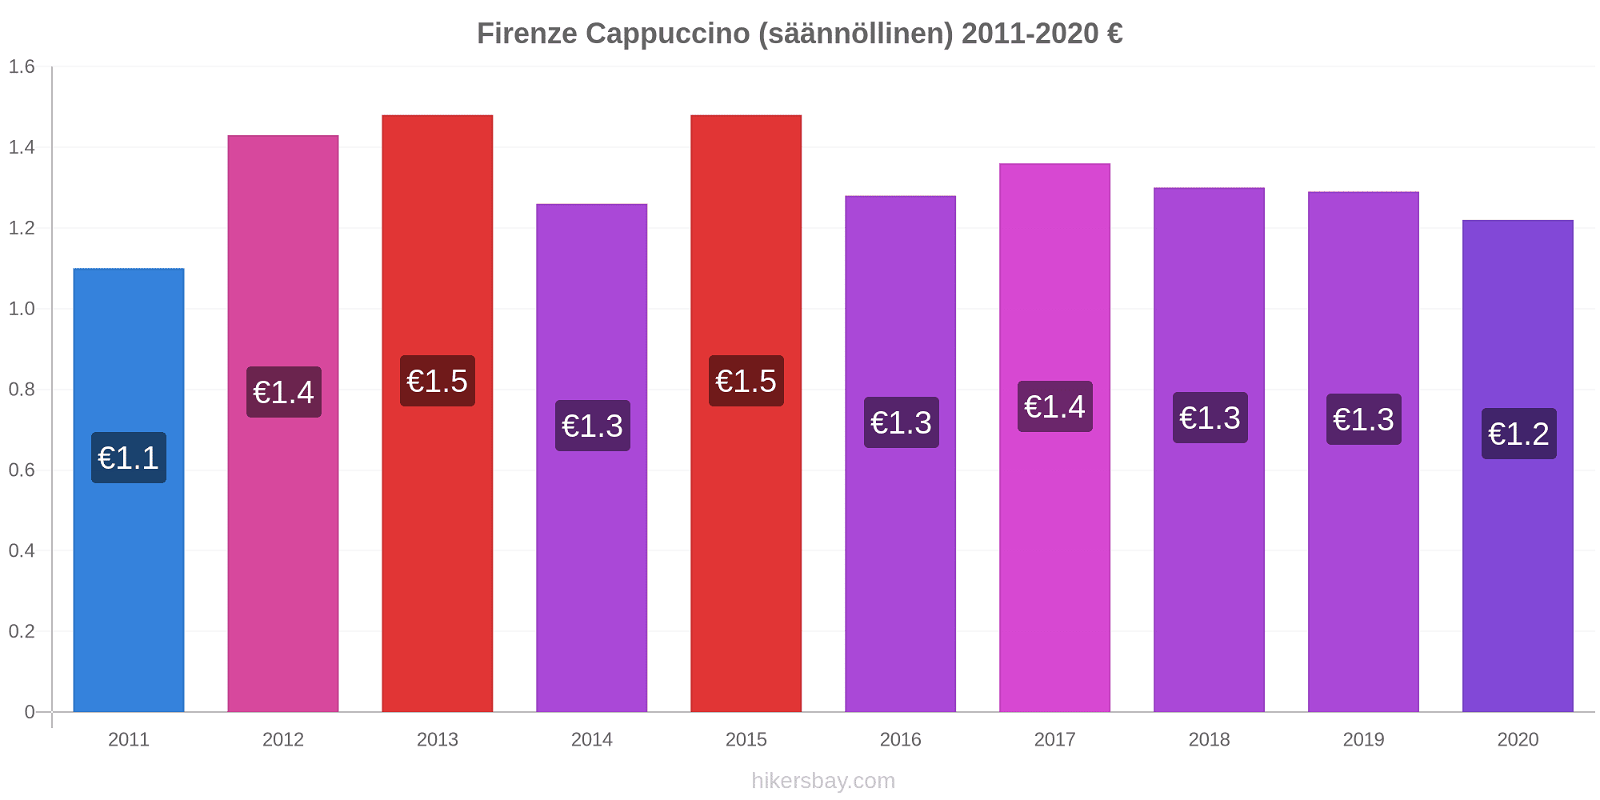 Firenze hintojen muutokset Cappuccino (säännöllinen) hikersbay.com